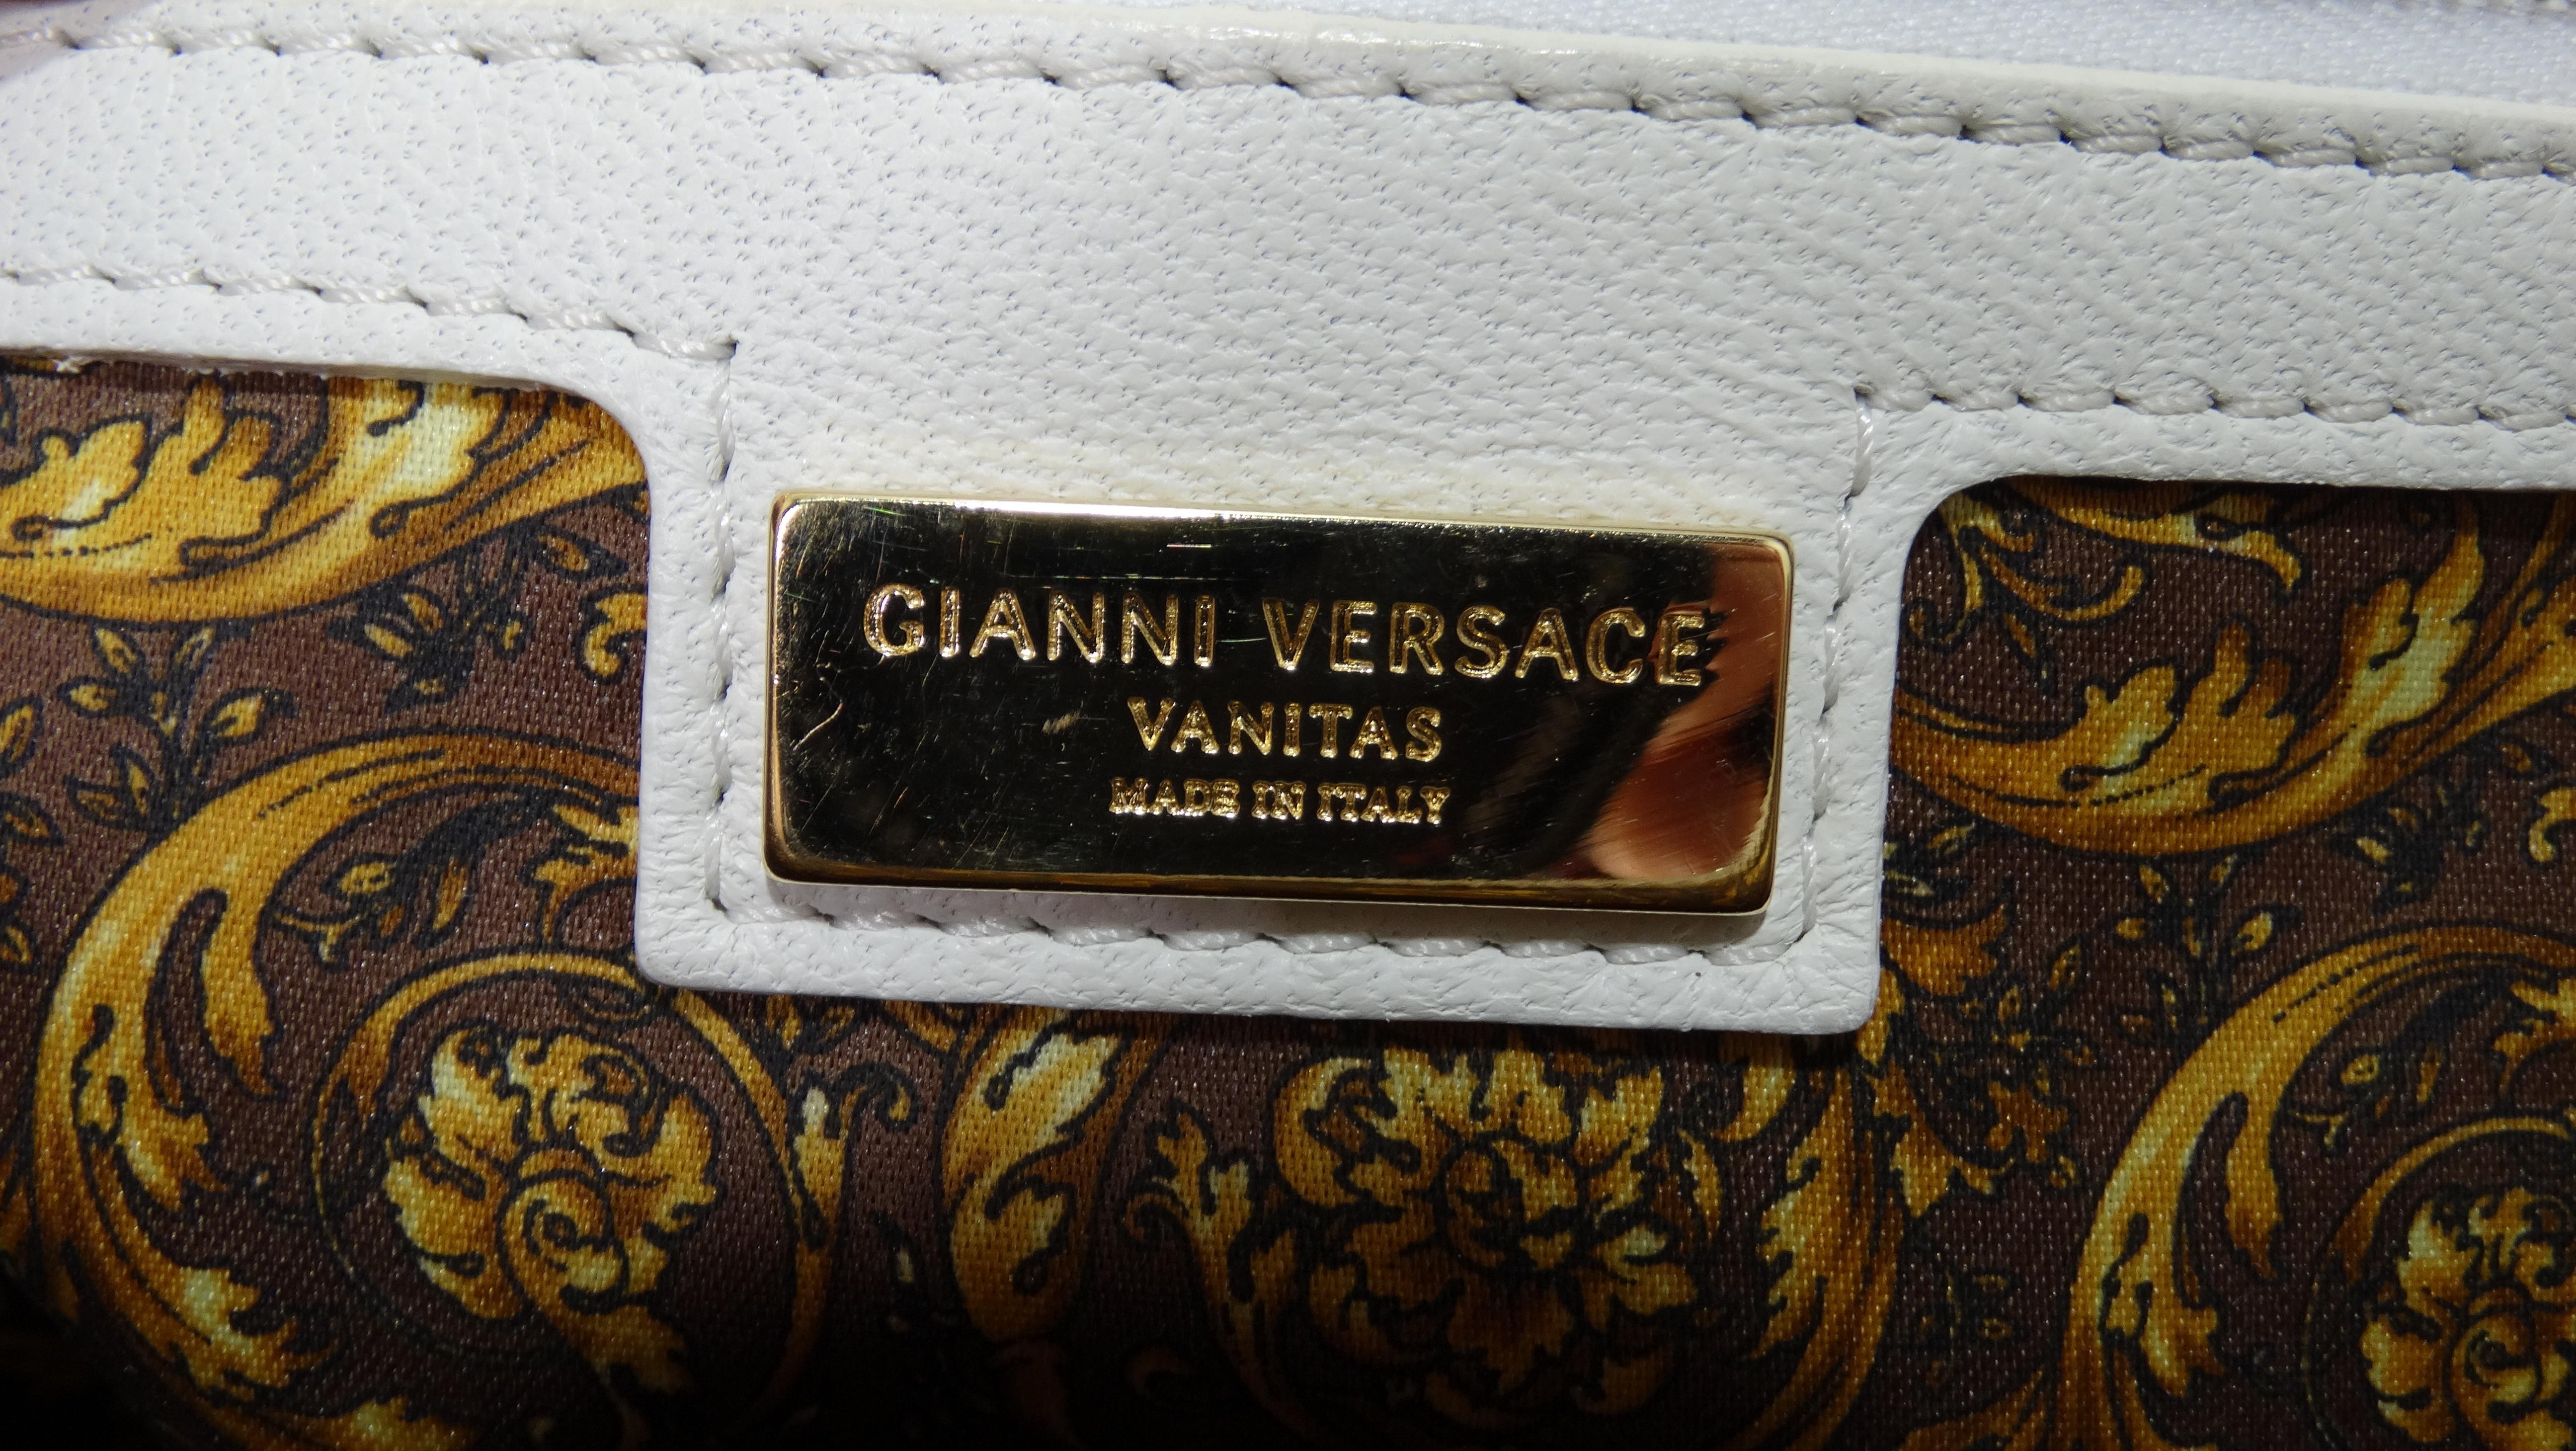 Gianni Versace Vanitas Quilted Handbag In Good Condition For Sale In Scottsdale, AZ